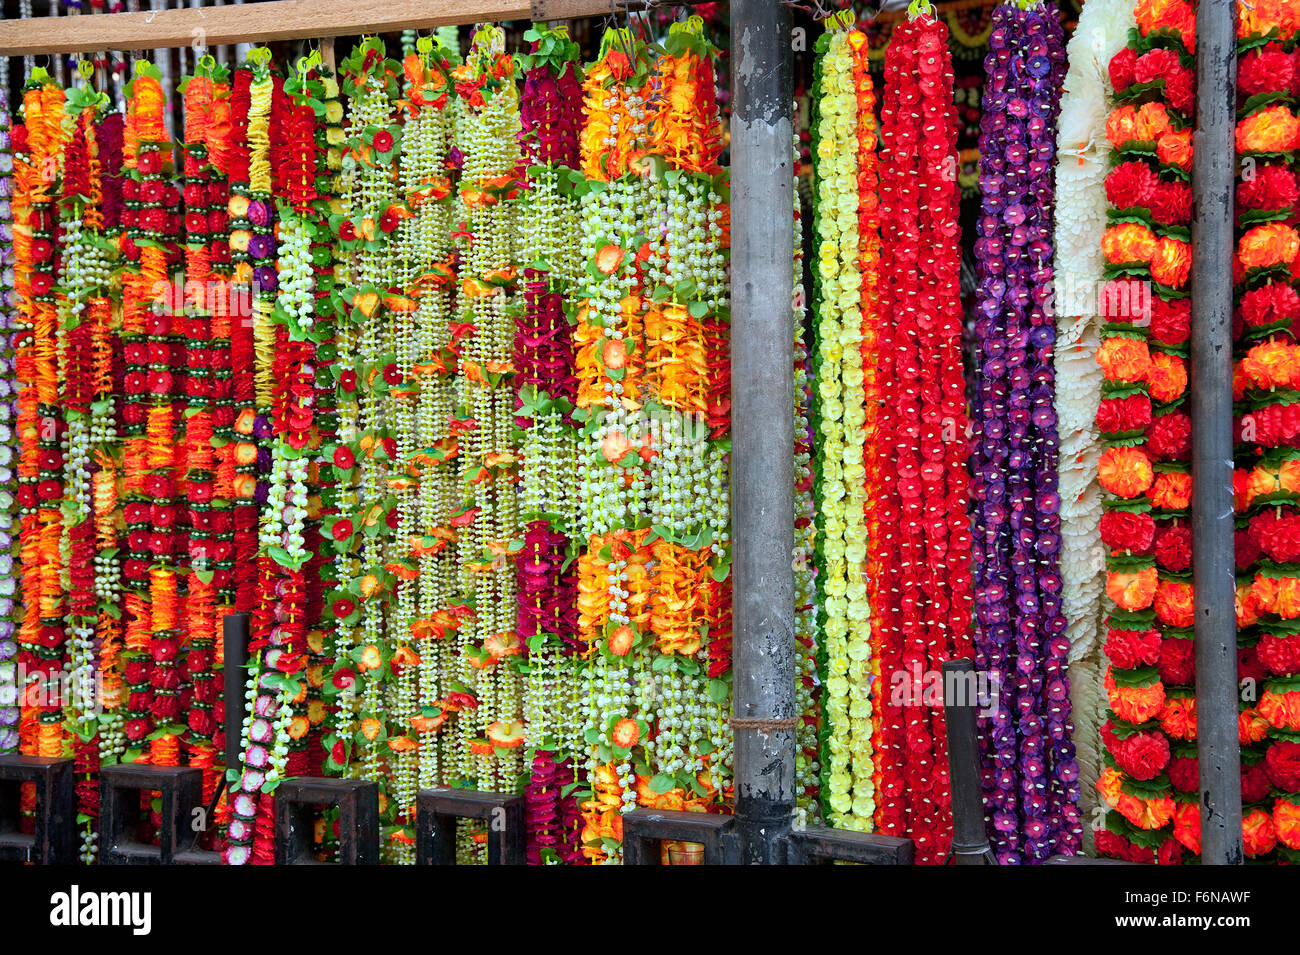 The image of Flower seller was taken in Mumbai, India Stock Photo